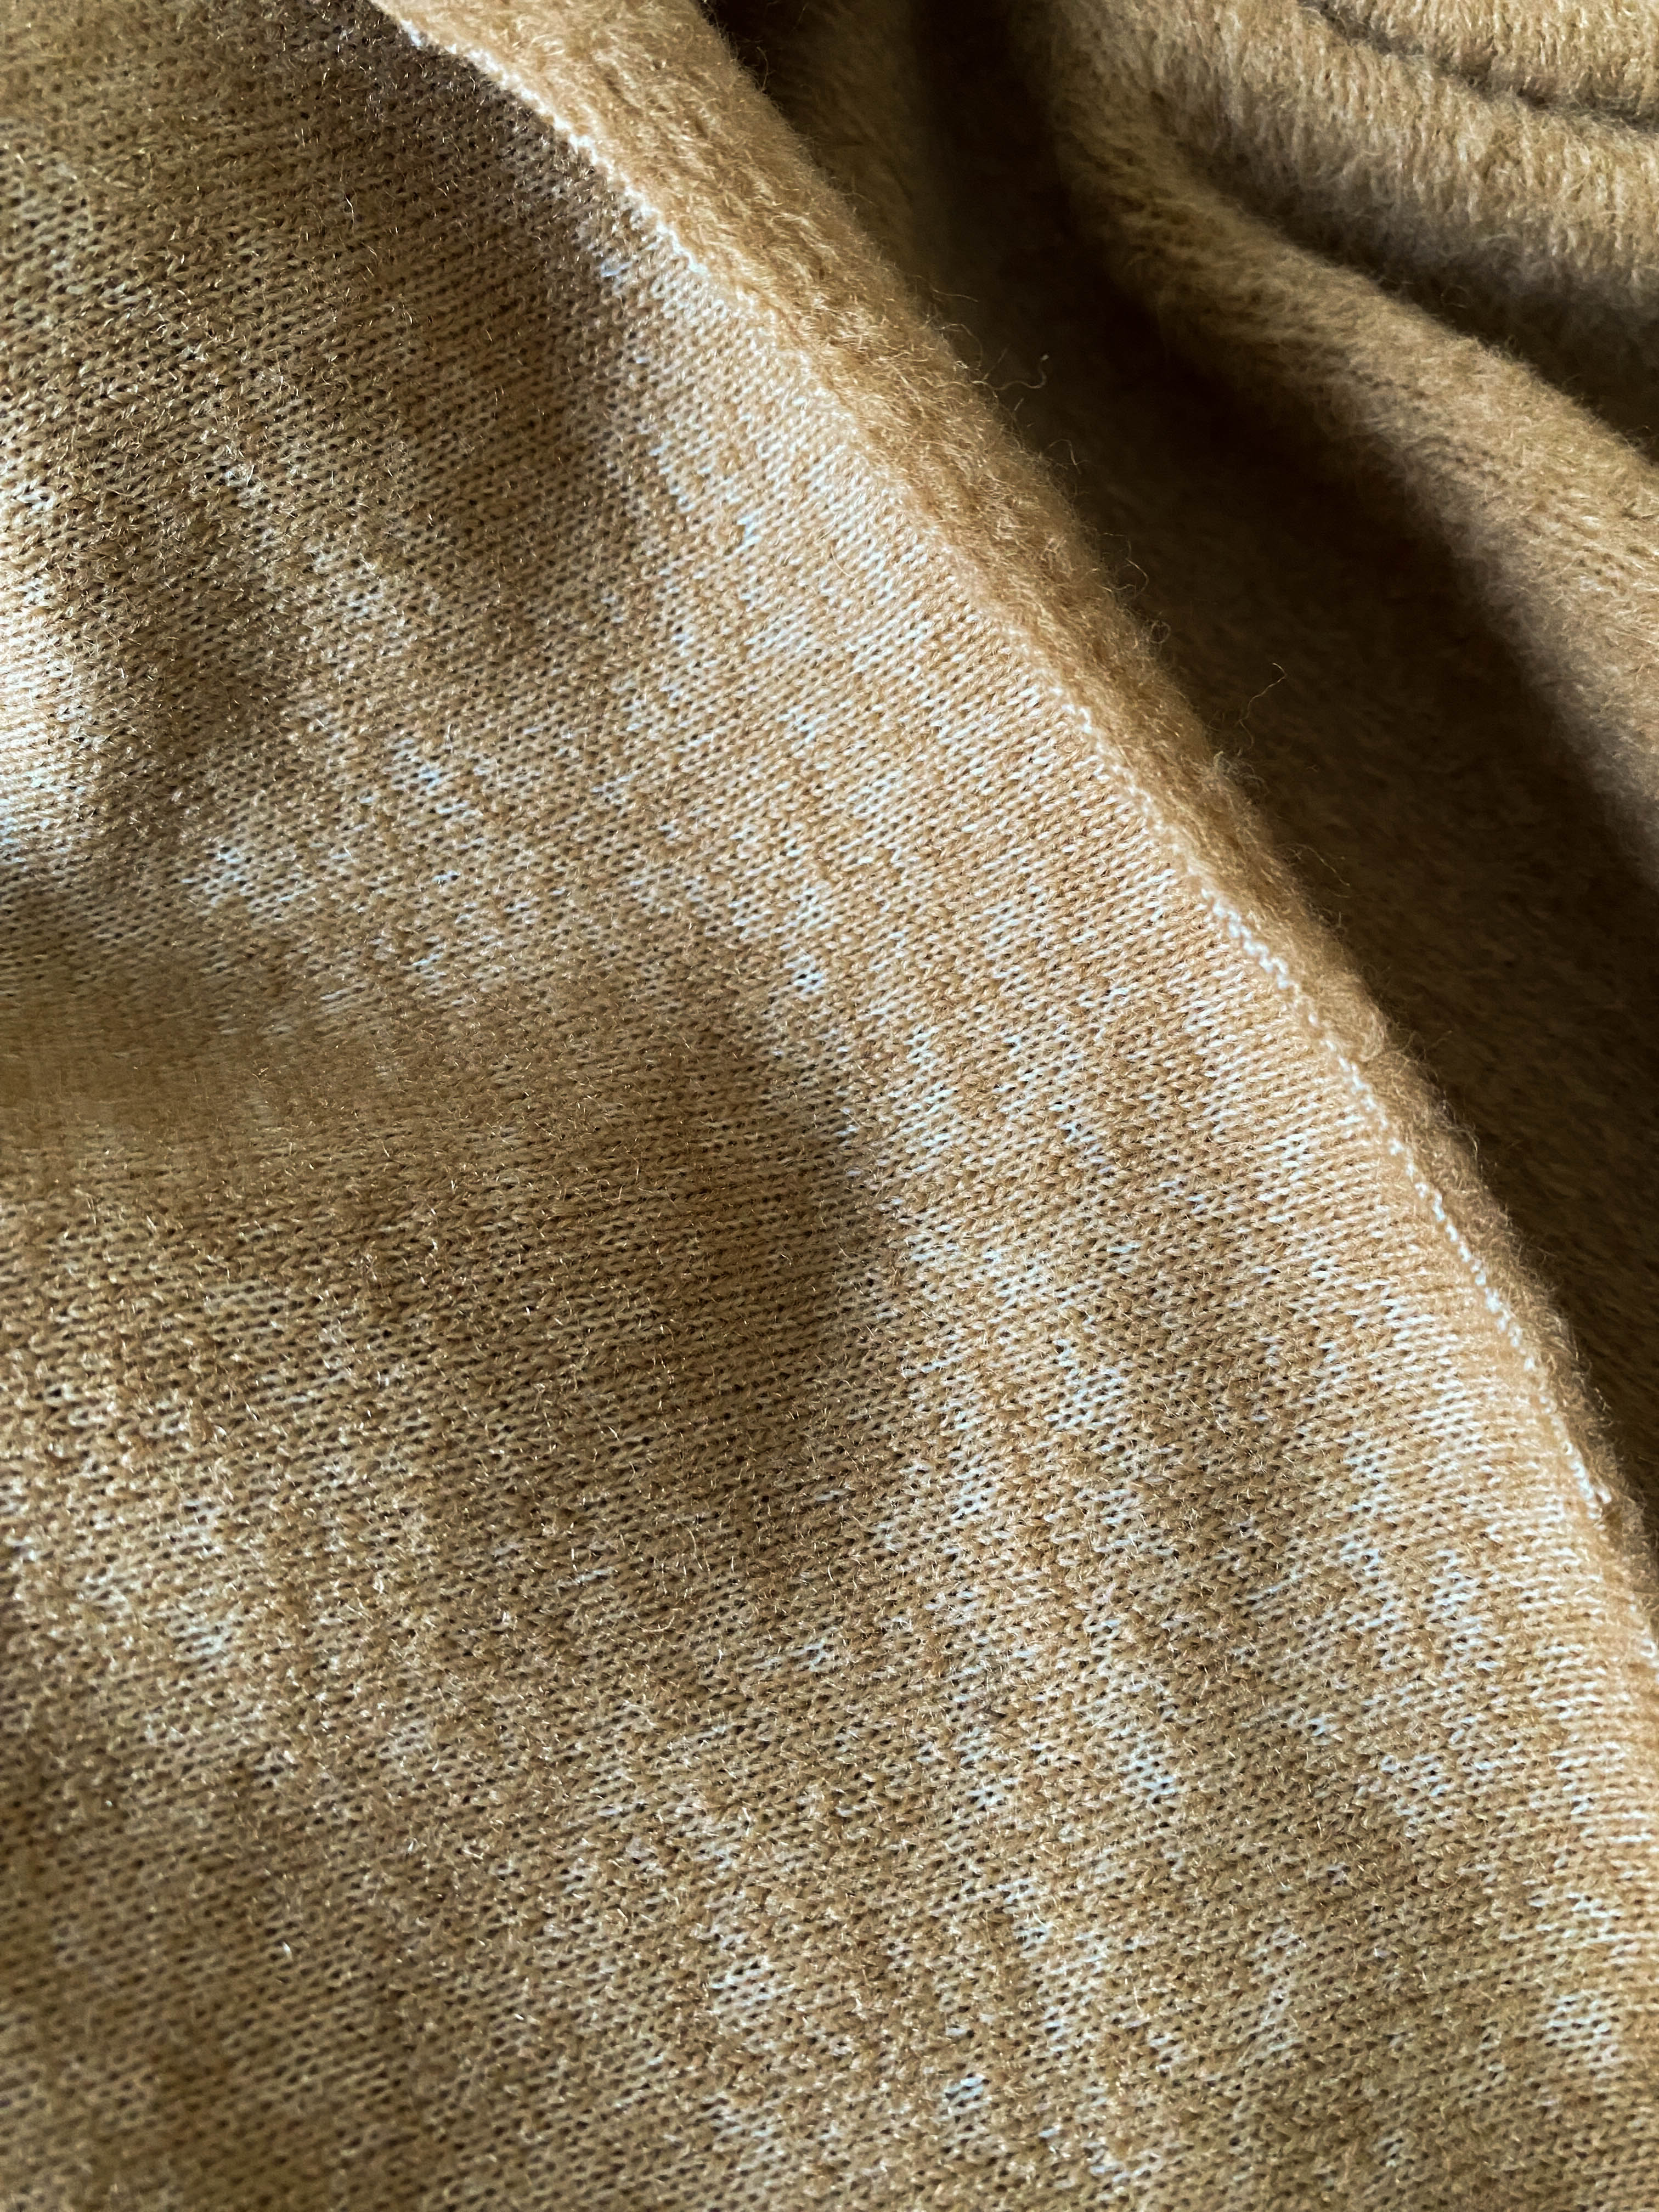 No. 1154 Wool knit light brown